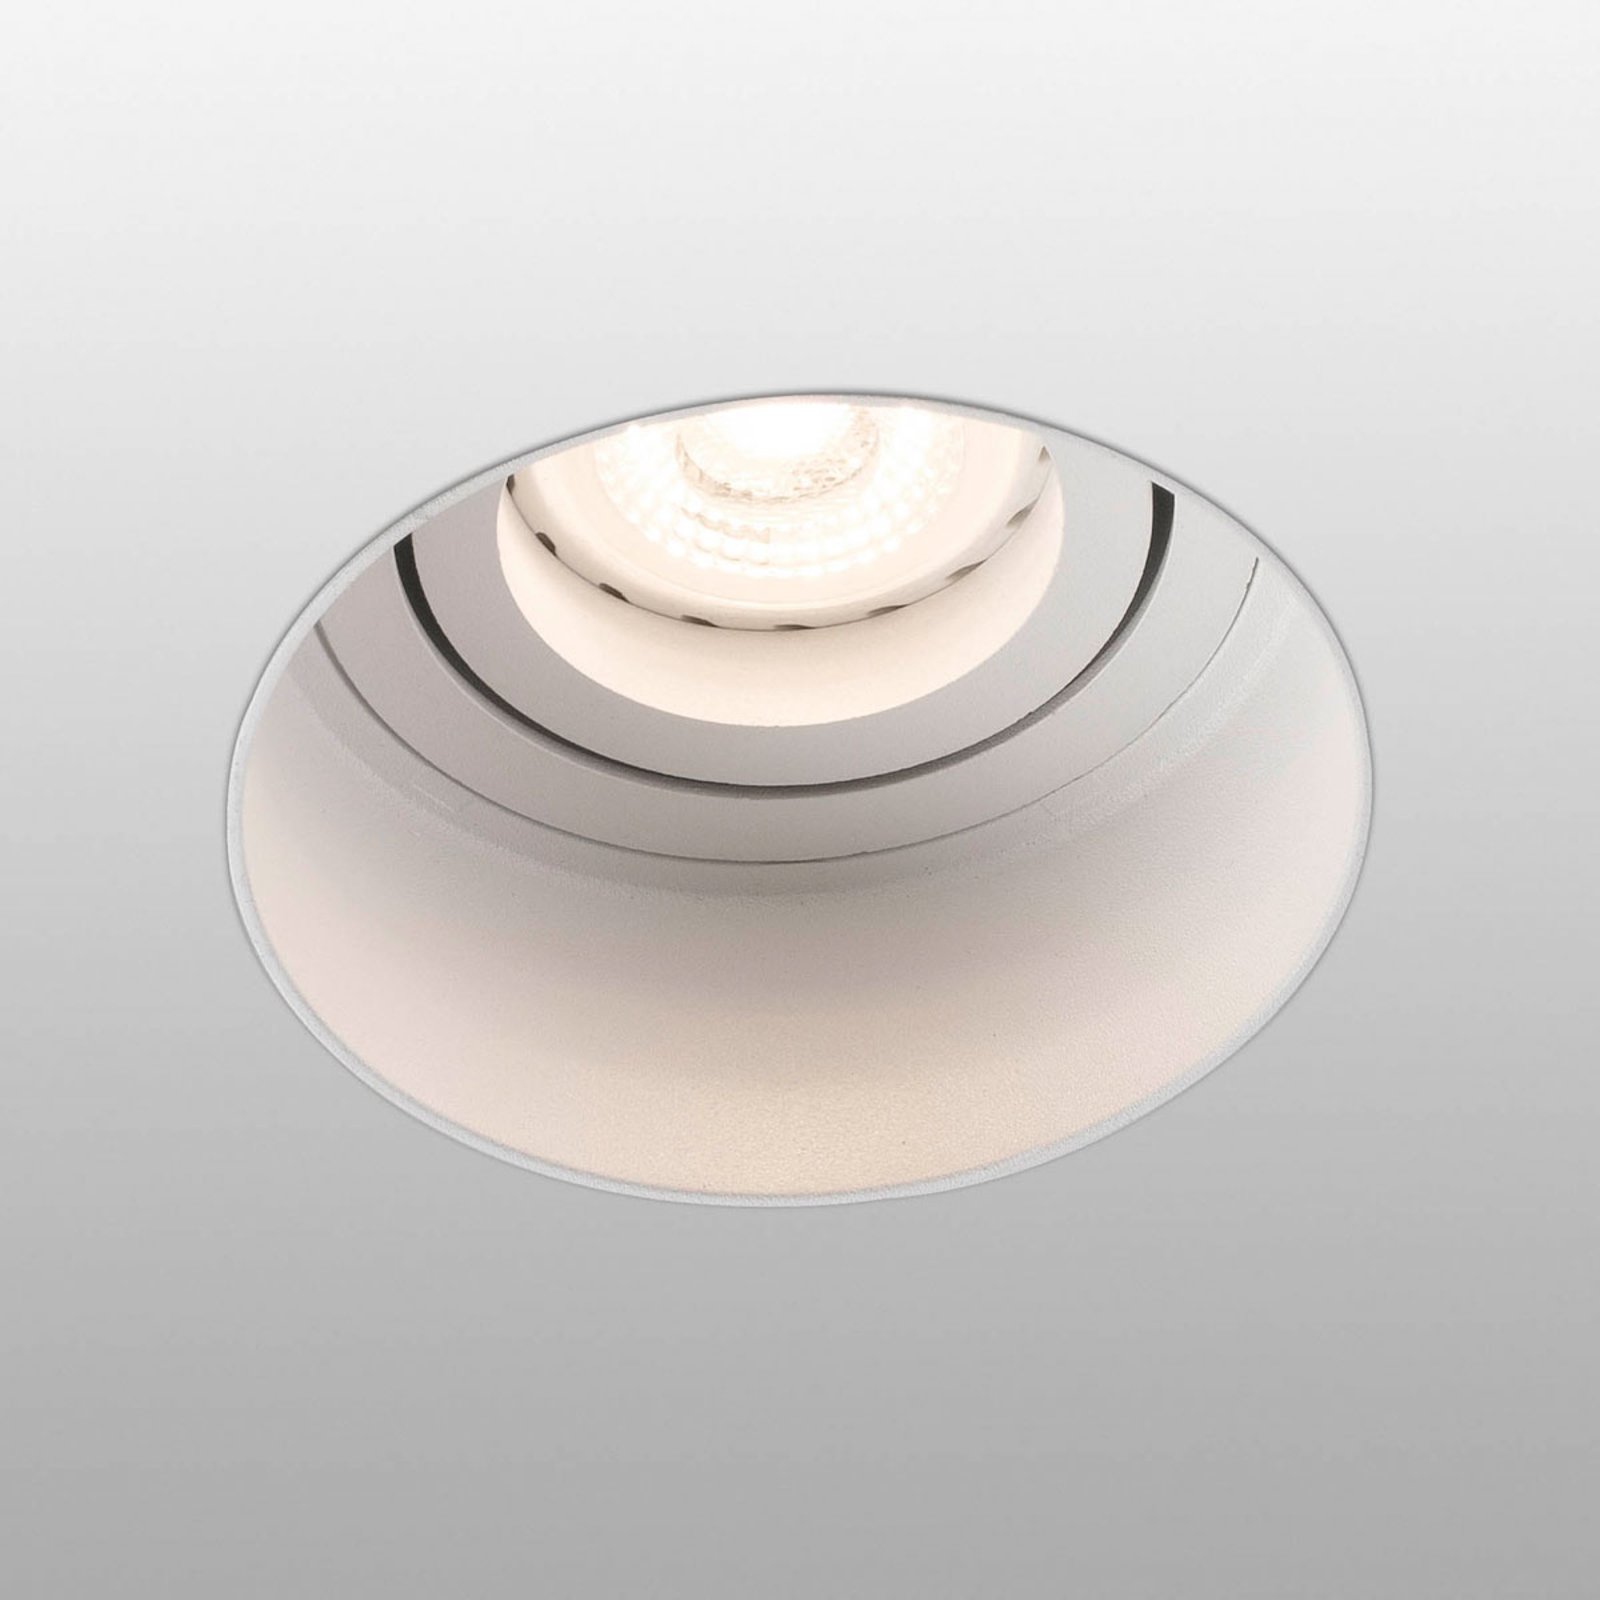 Hyde downlight 1-bulb round pivotable white